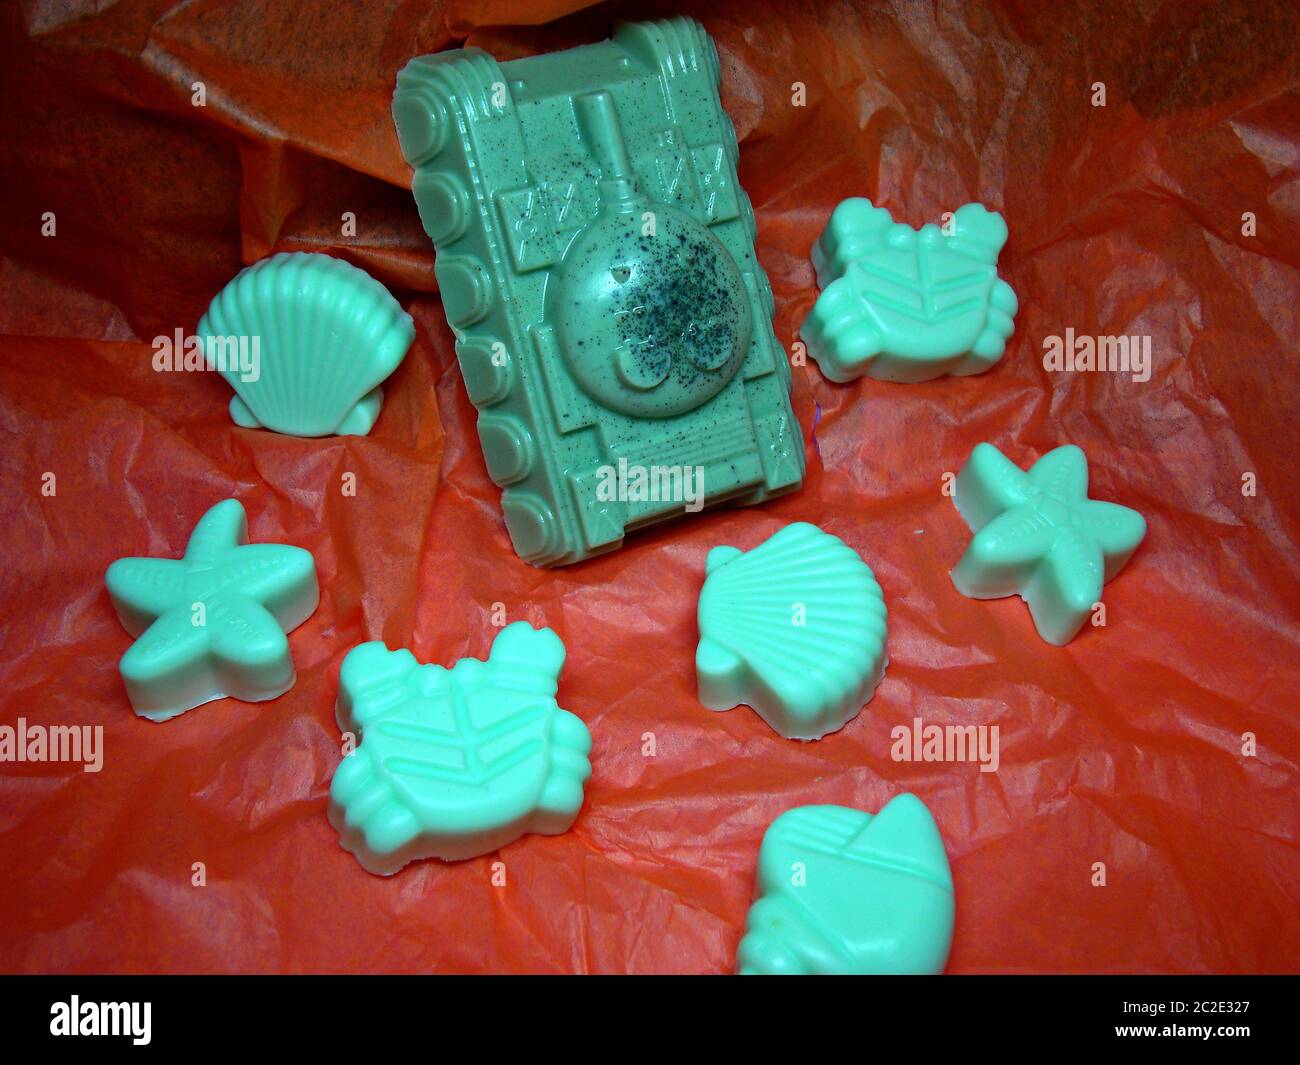 Natural handmade soap. Tank and marine life: crabs, stars, seashells on an orange background. Stock Photo